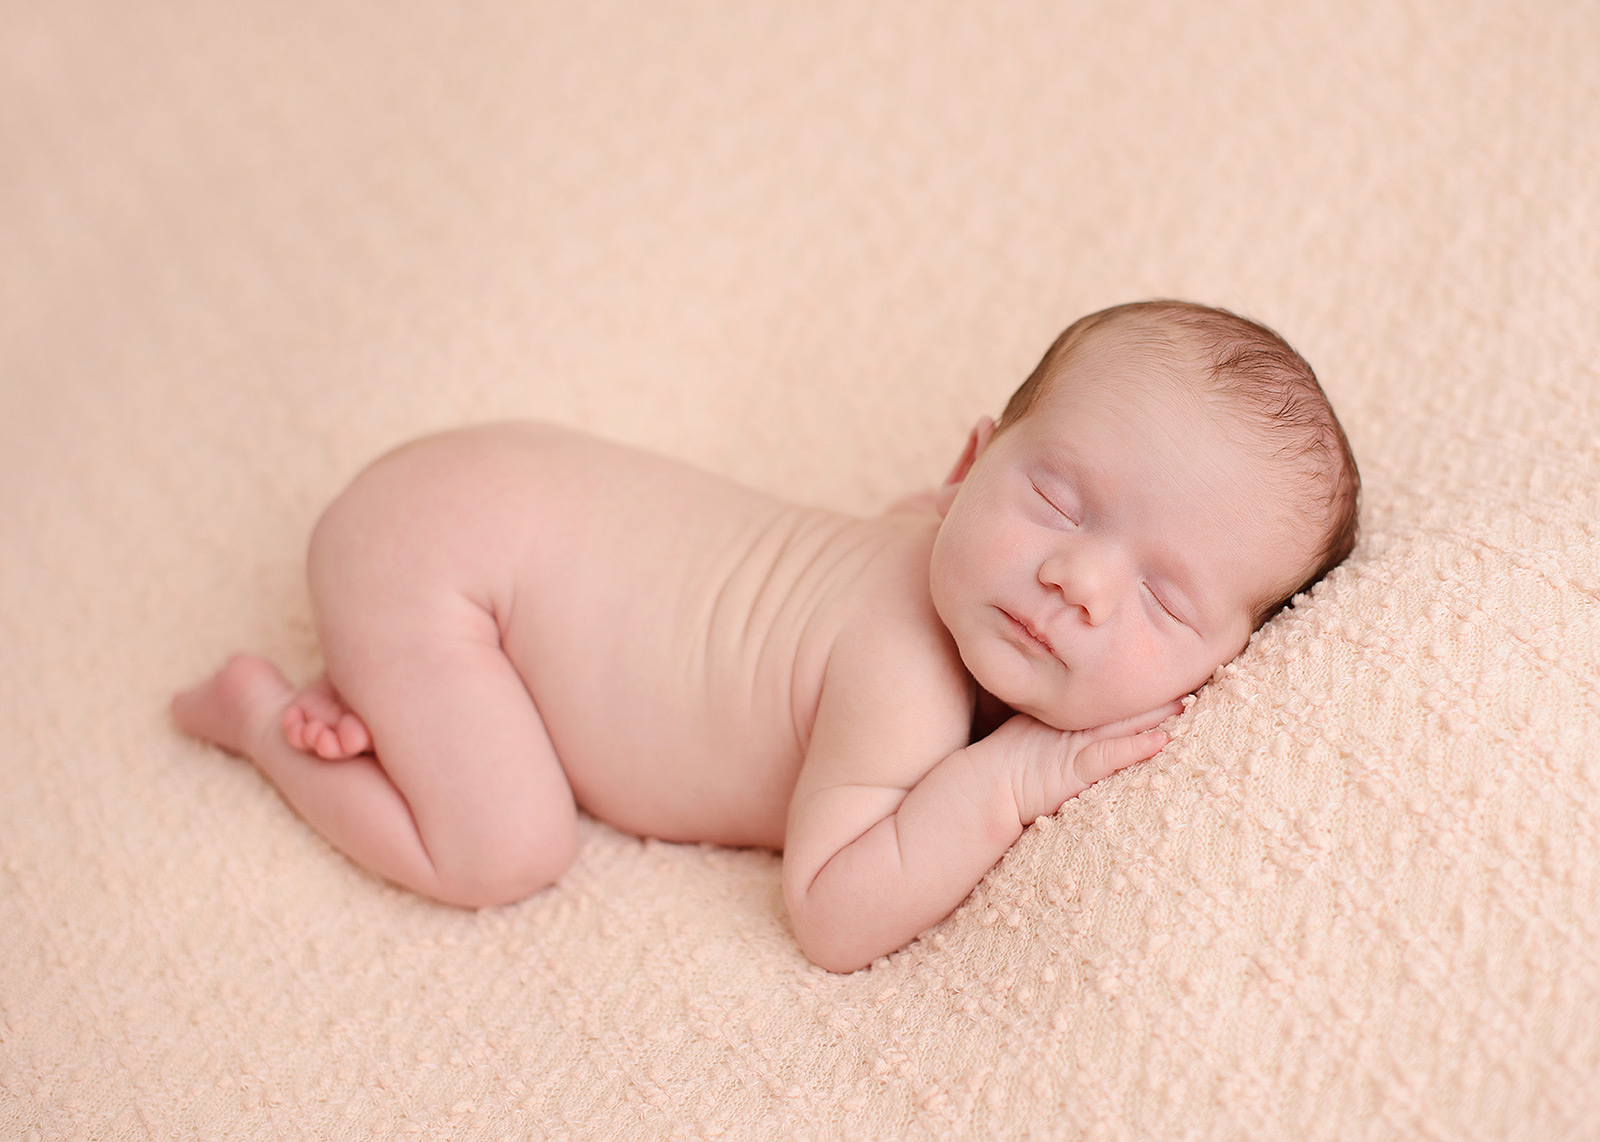 Newborn baby girl sleeping on pink blanket